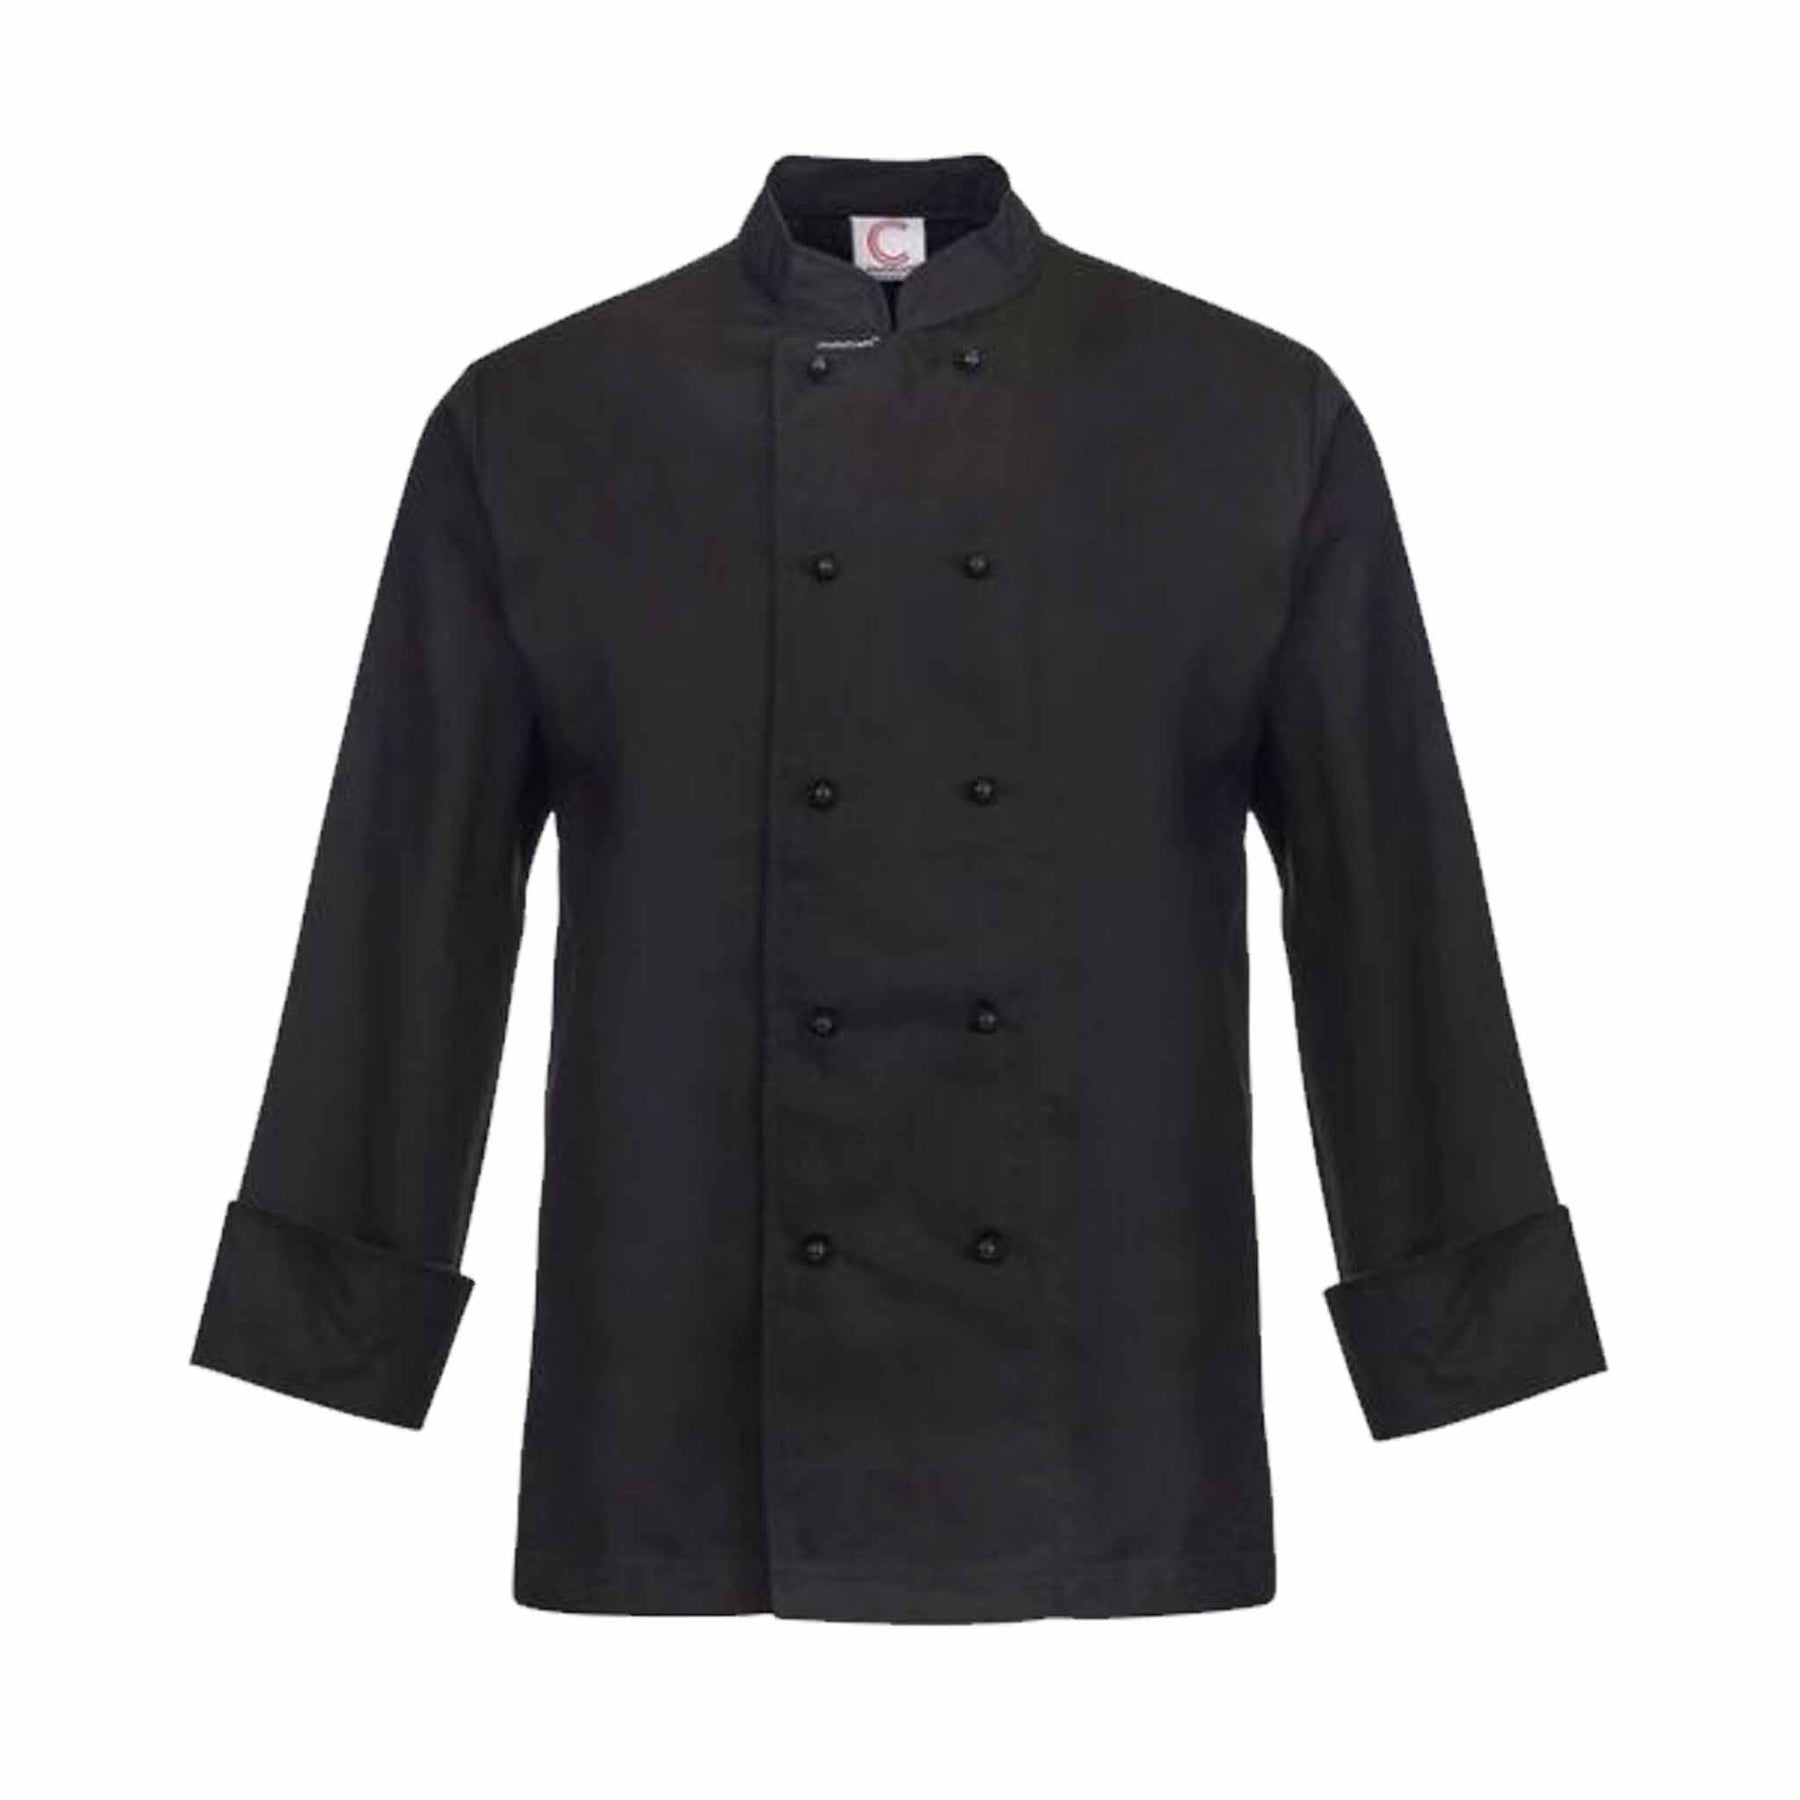 black long sleeve chefs jacket